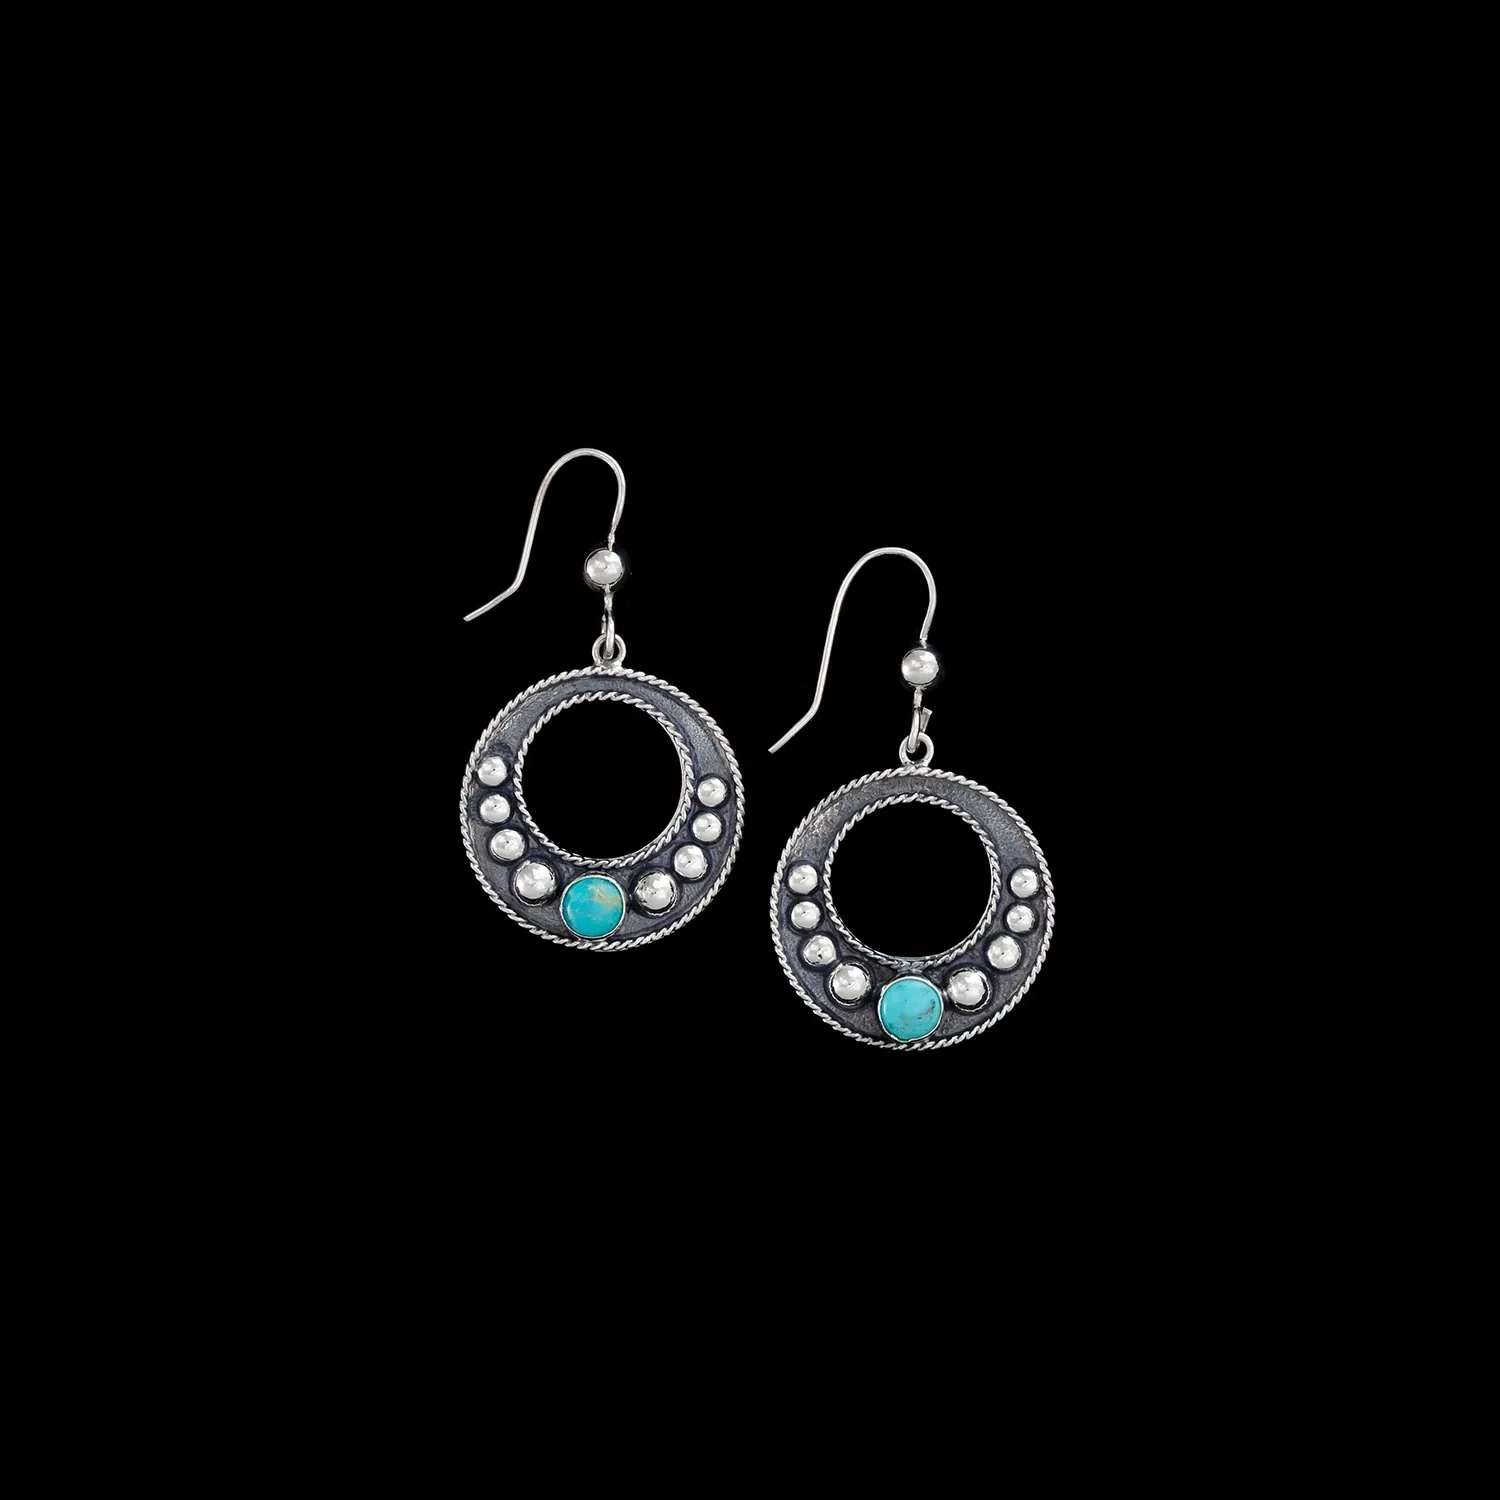 011-767 Turquoise by Blair earrings